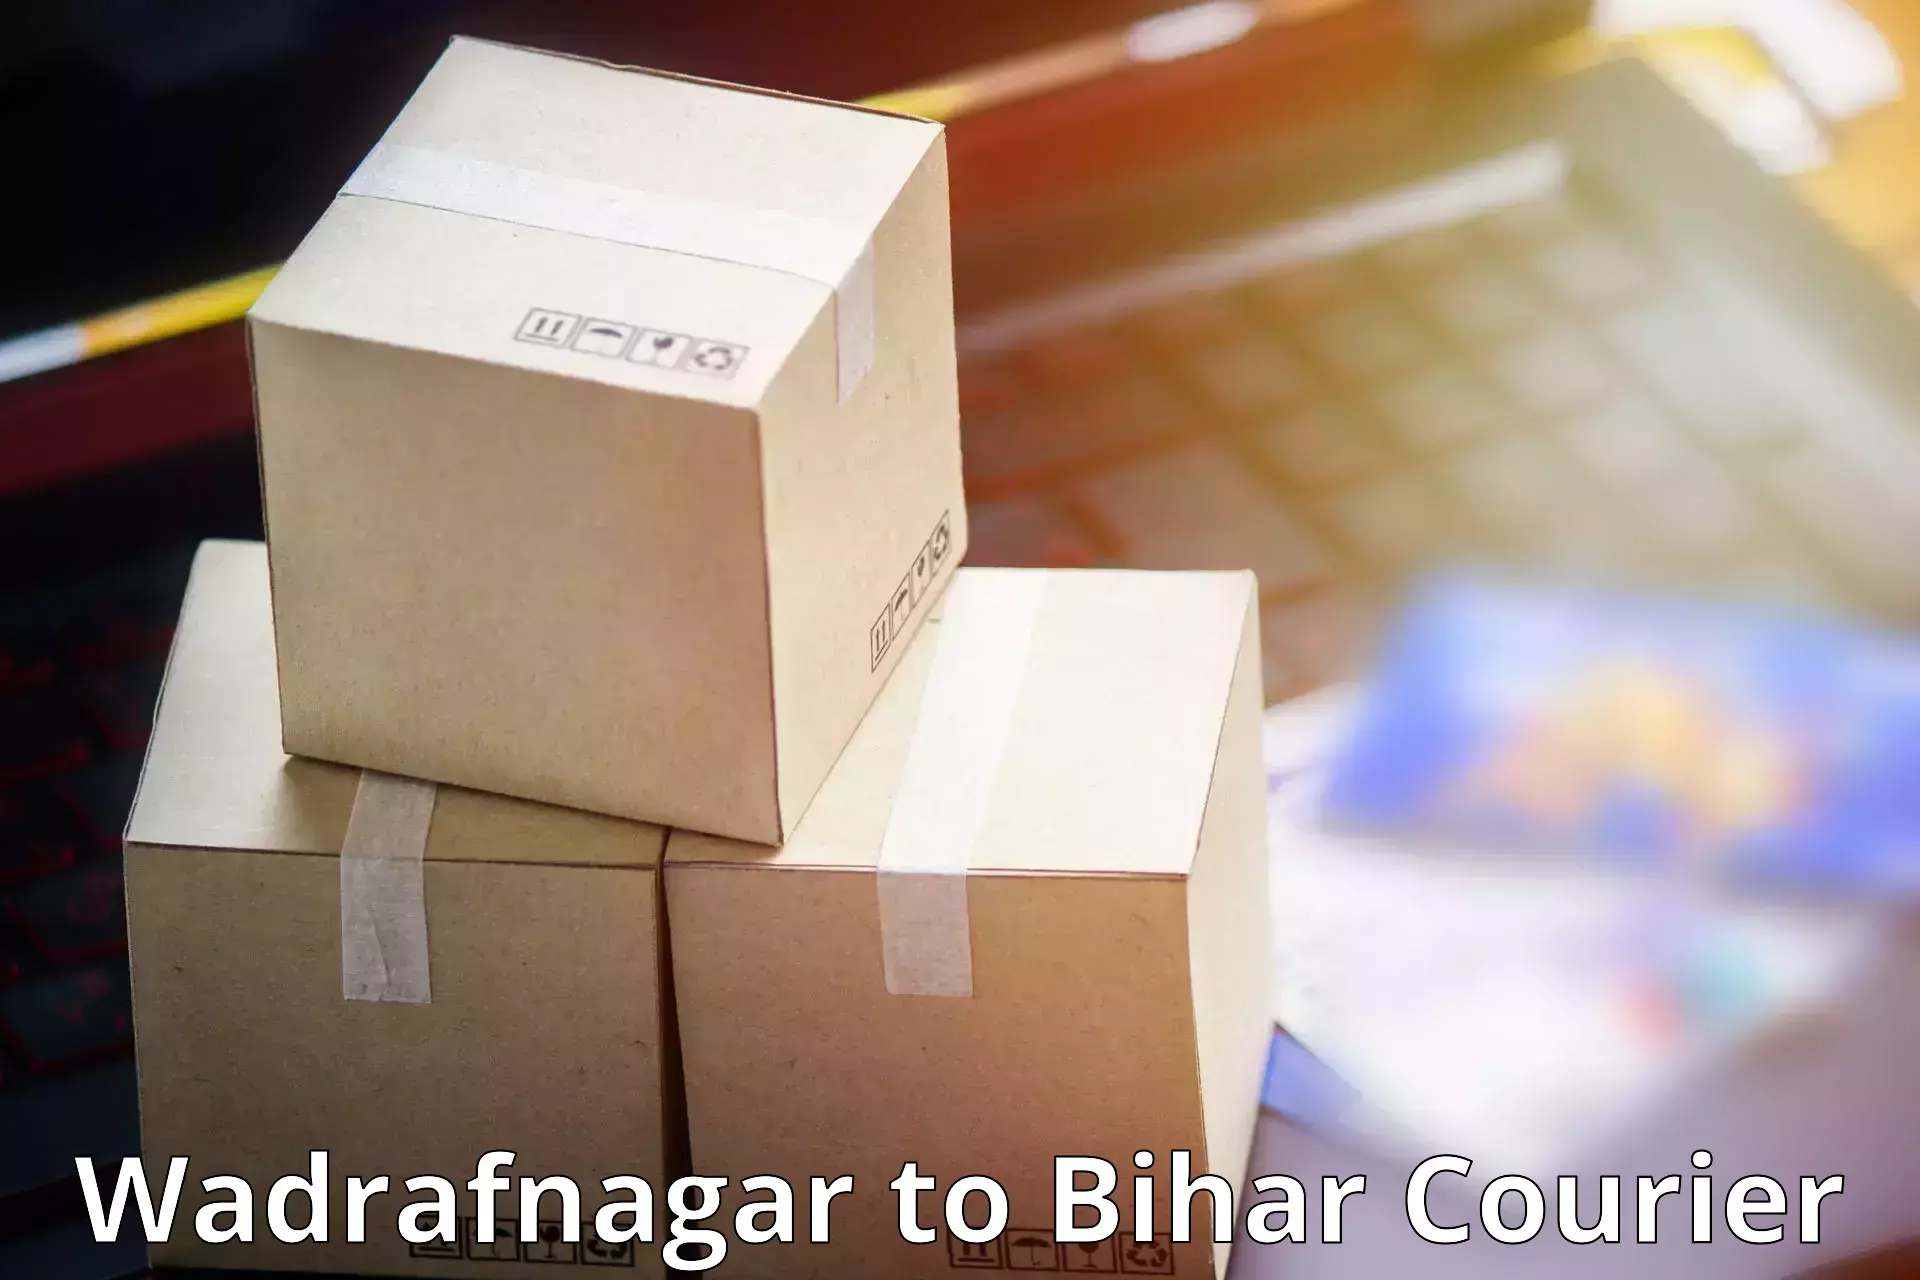 High-performance logistics Wadrafnagar to Kishanganj